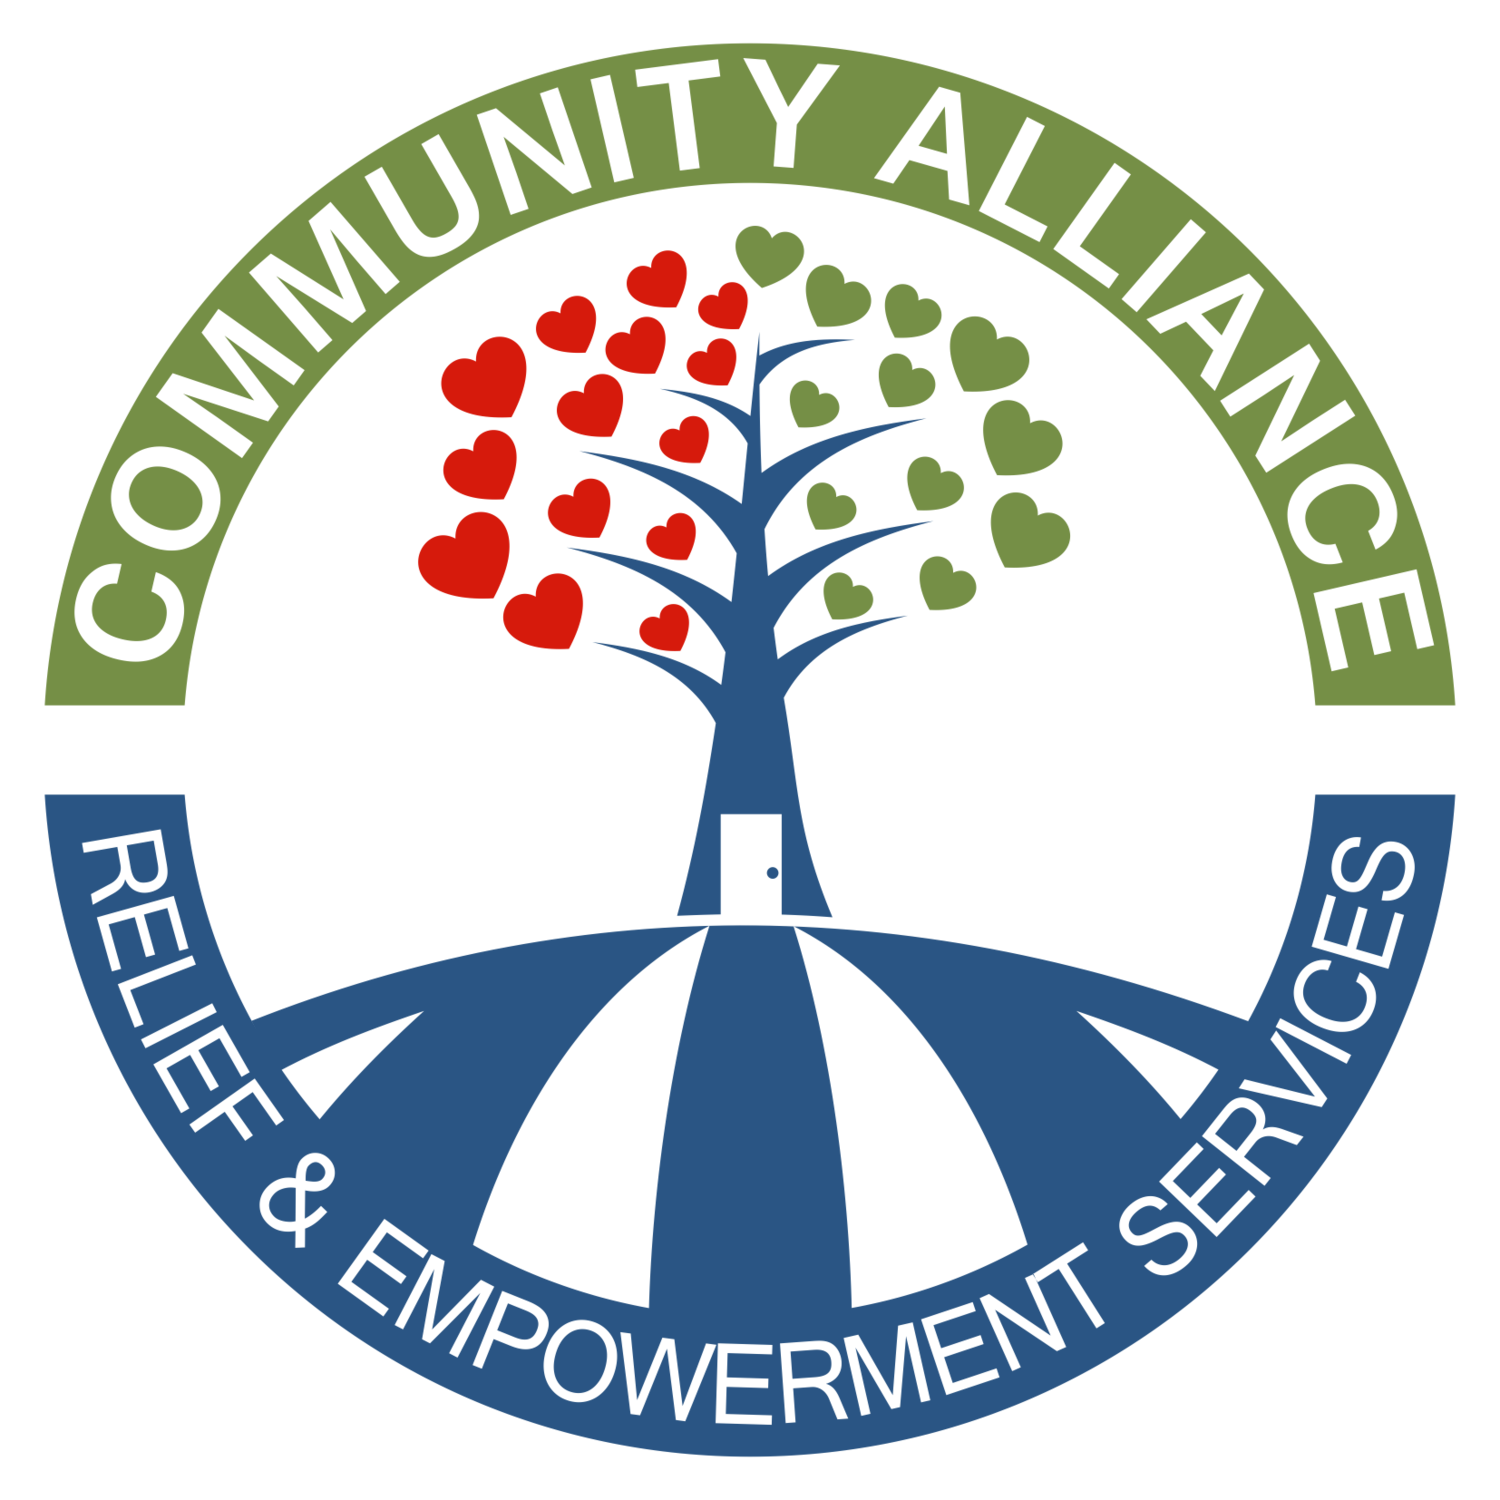 Community Alliance Relief